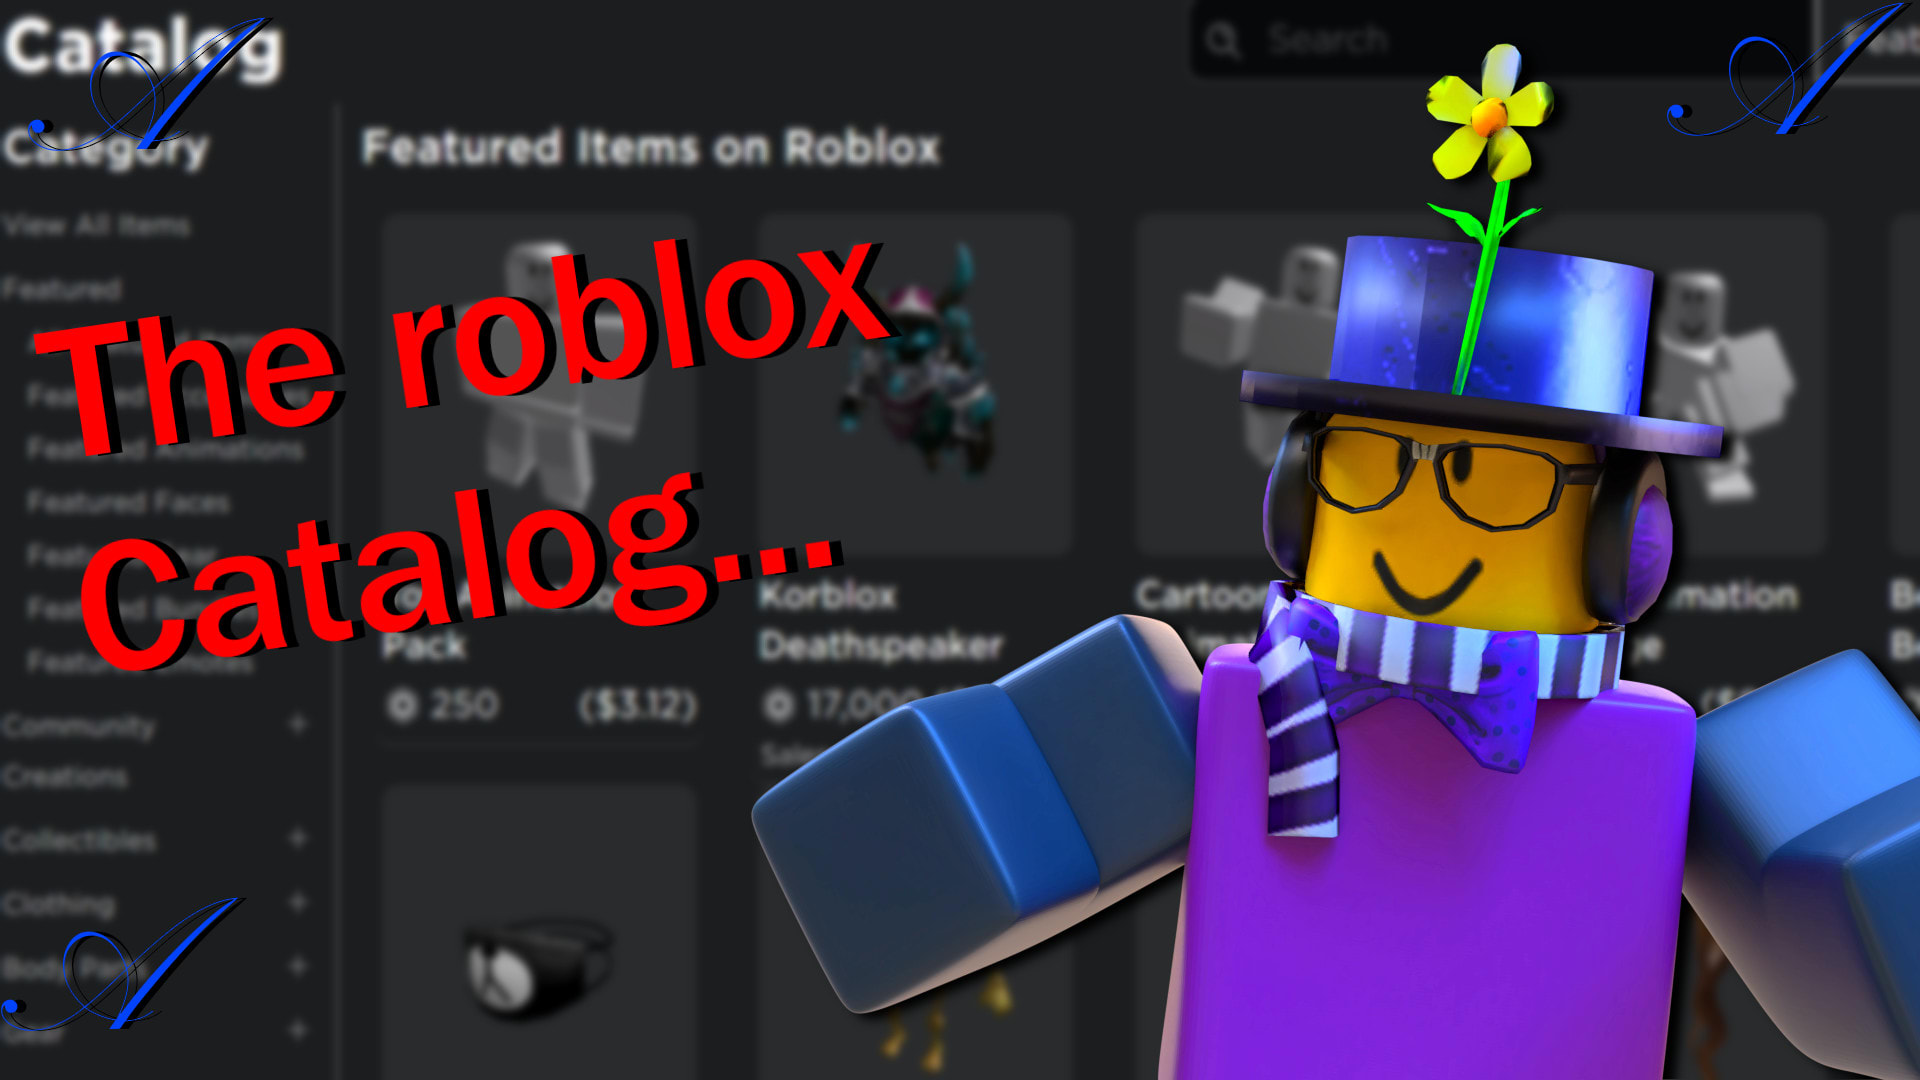 Make You A High Quality Roblox Gfx By Alexmehic123 - roblox how to make a gfx